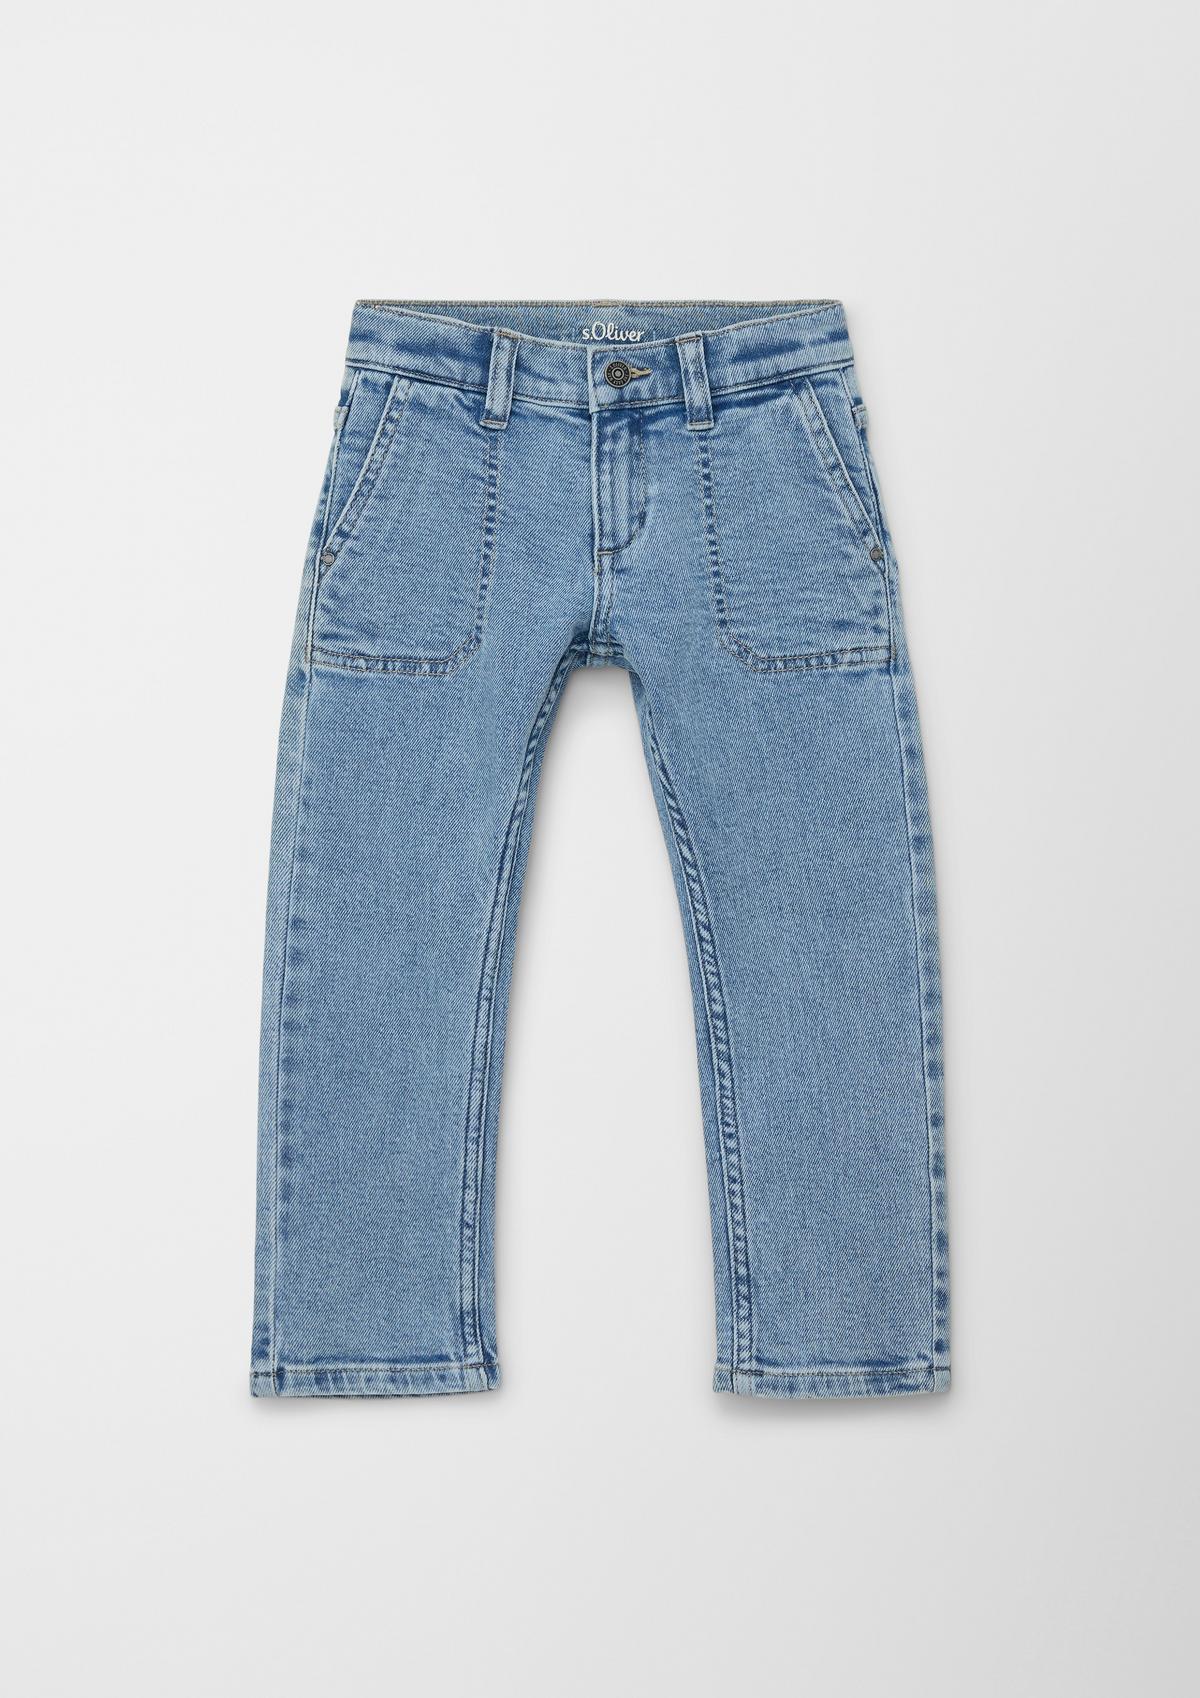 s.Oliver Pelle jeans / regular fit / mid rise / straight leg / garment wash